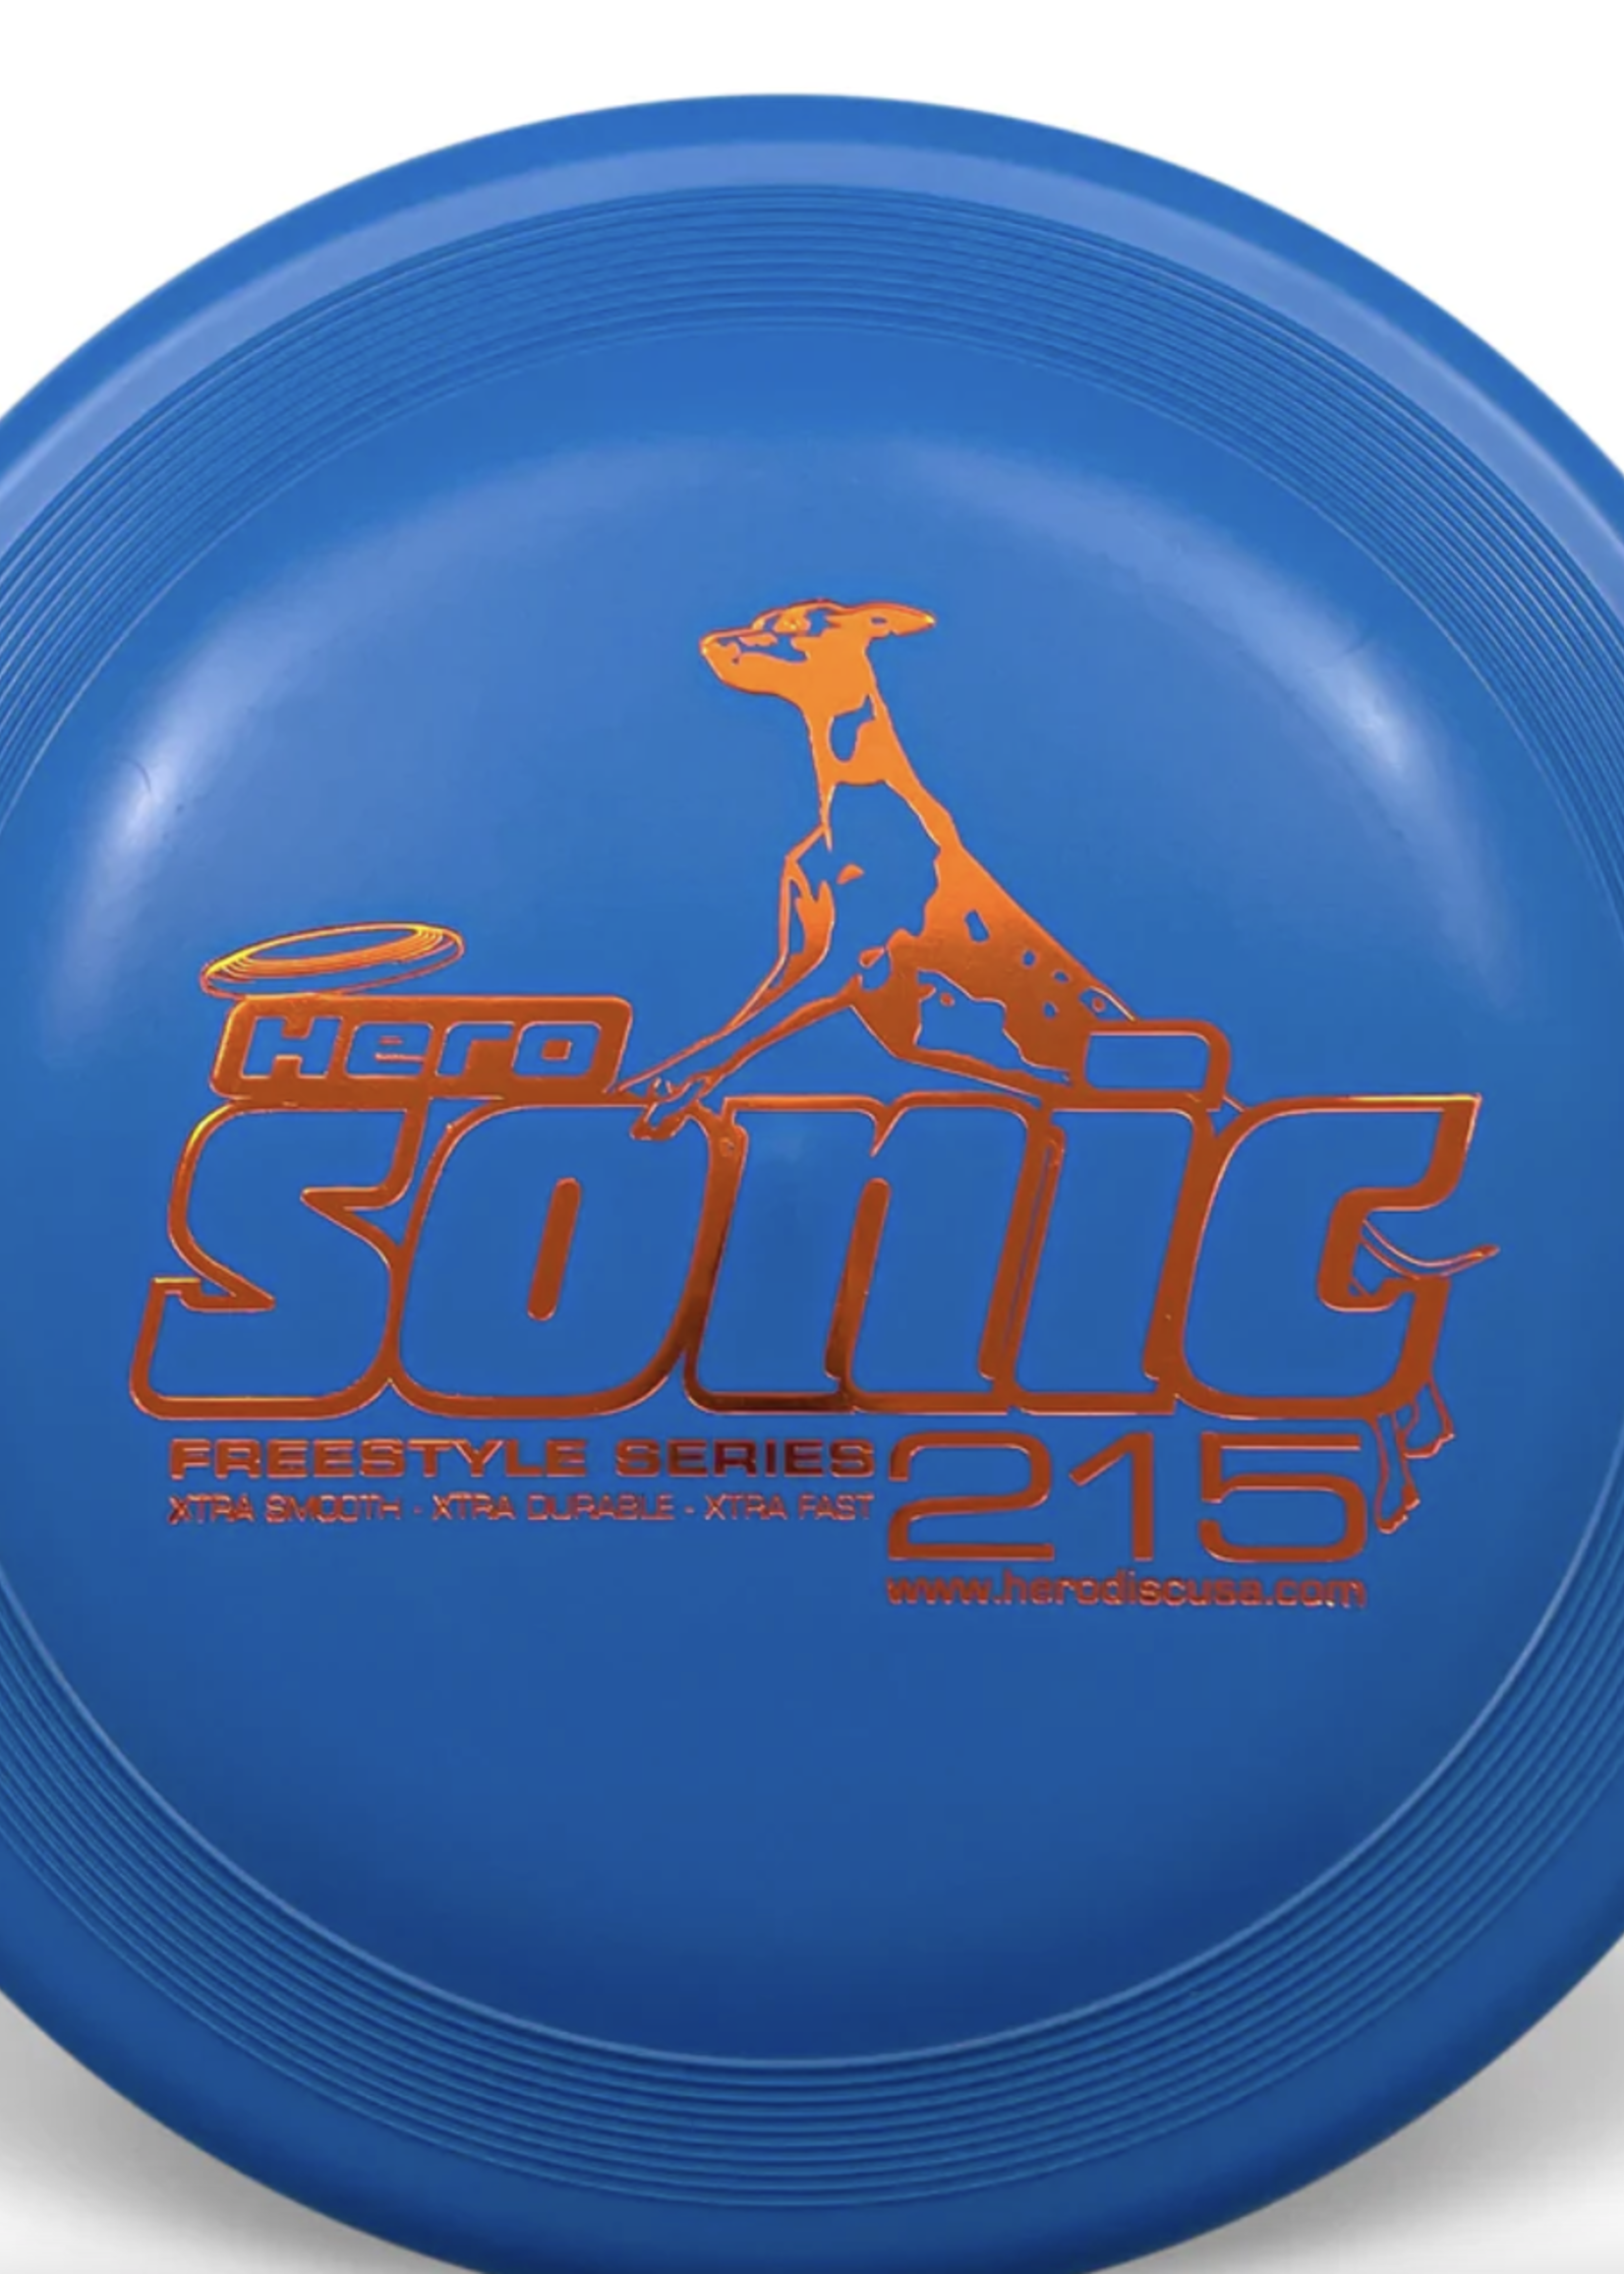 HD03 - Hero Disc Sonic Xtra 215 Freestyle Frisbee